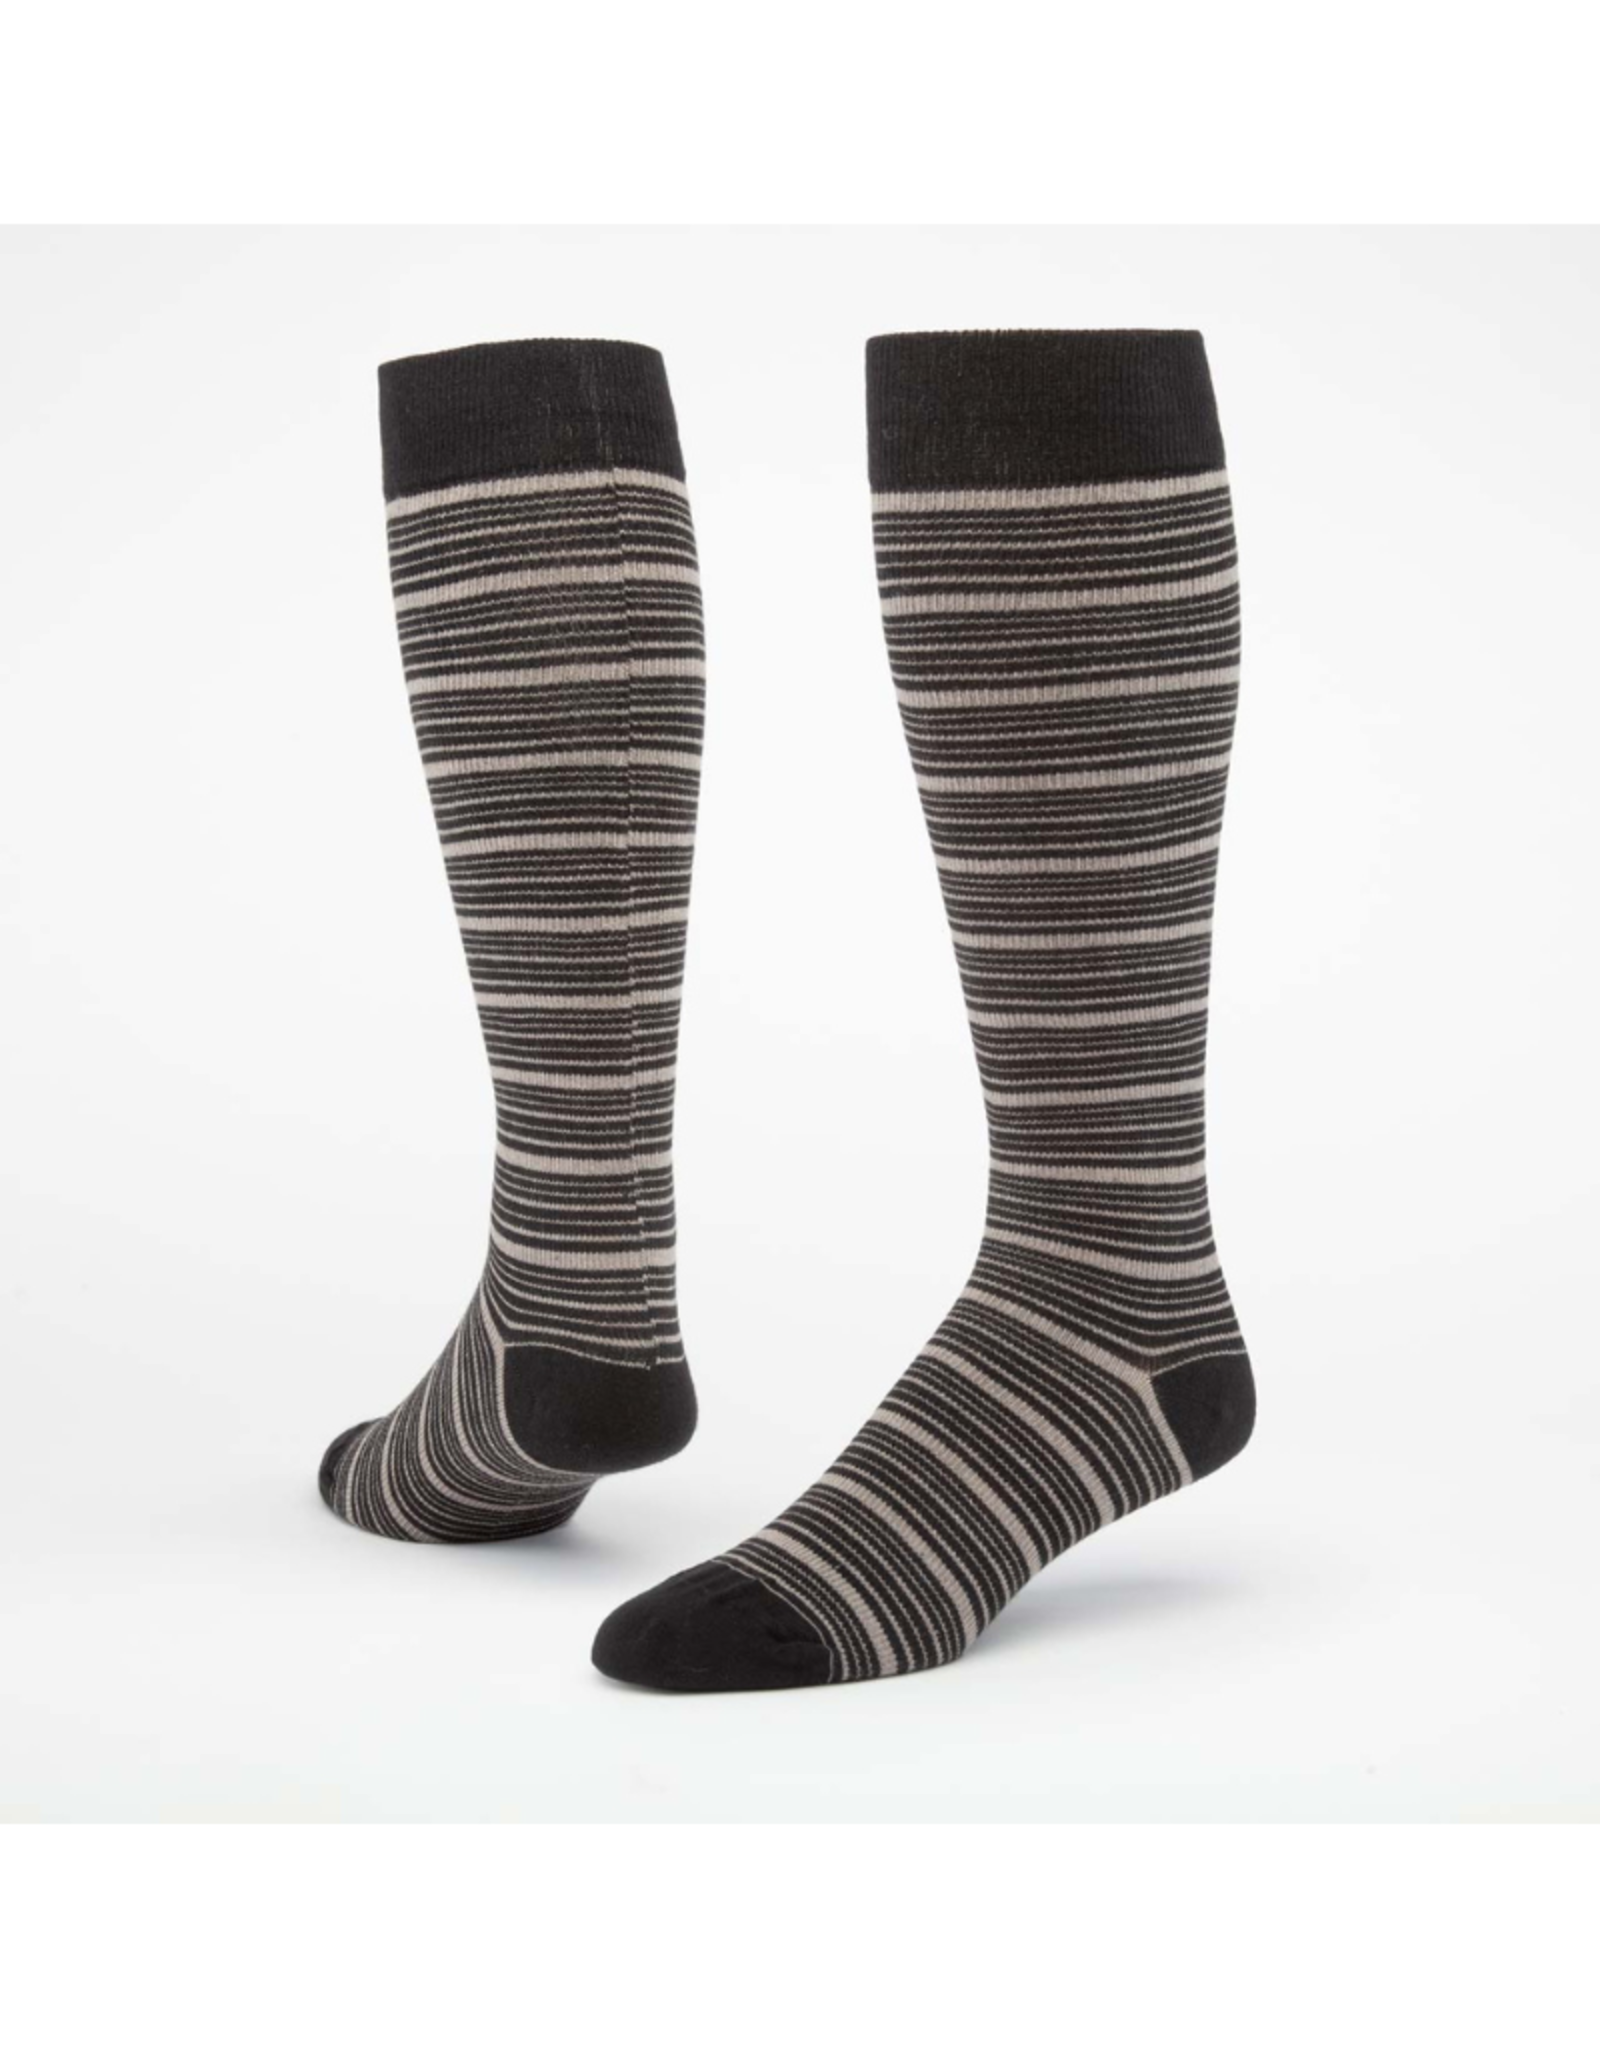 Maggie's Organics Compression Socks (Grey)